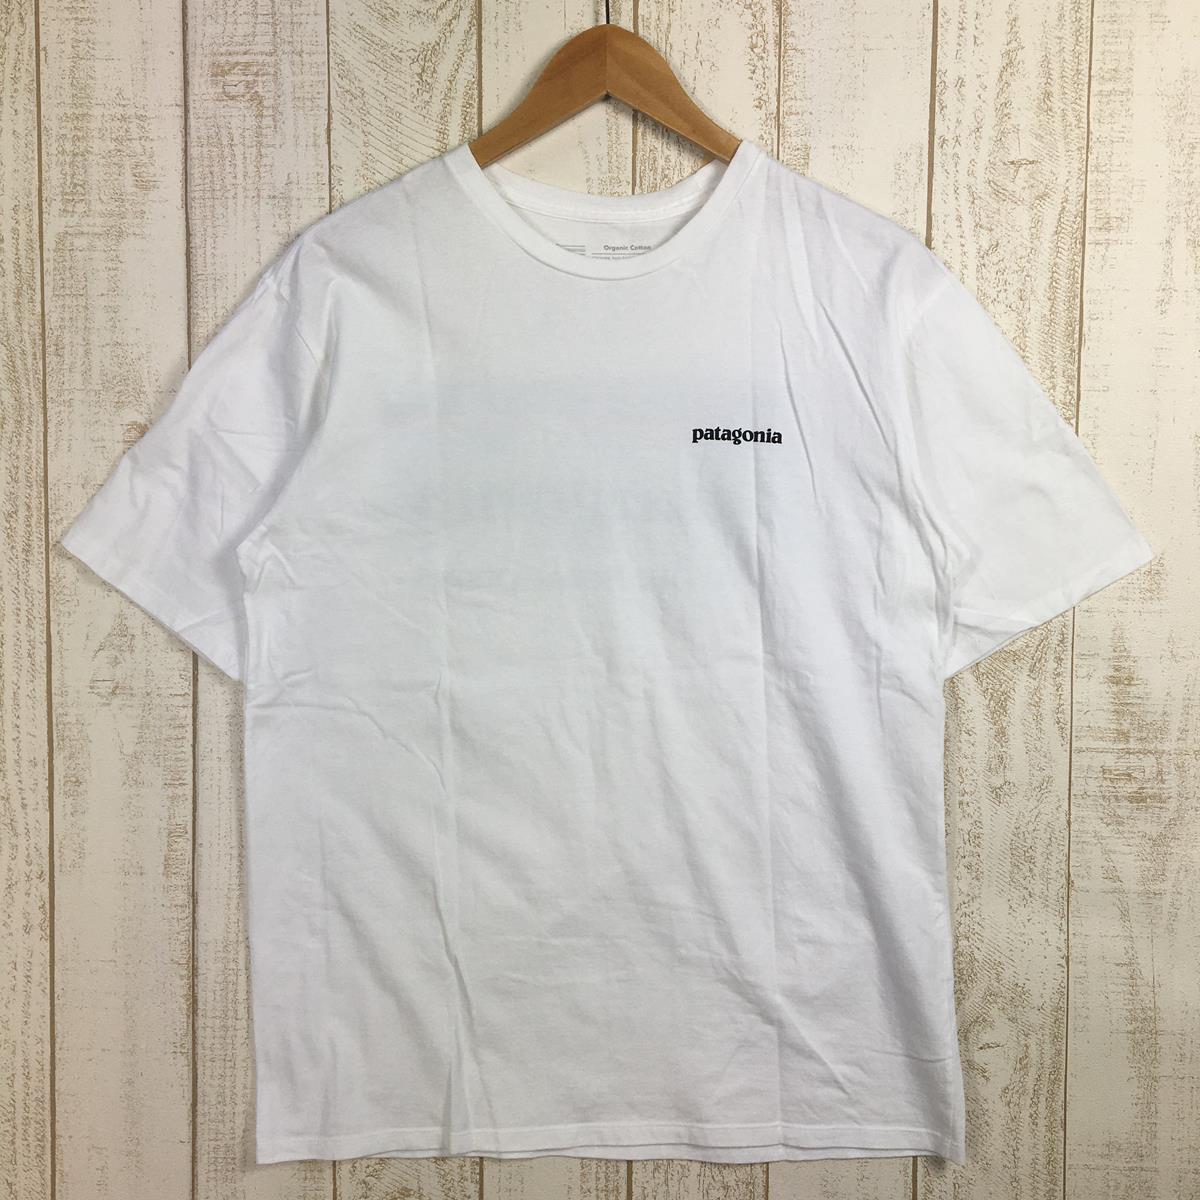 【MEN's S】 パタゴニア P-6 ミッション オーガニック Tシャツ P-6 Mission Organic T-shirt PATAGONIA 37529 WHI White ホワイト系